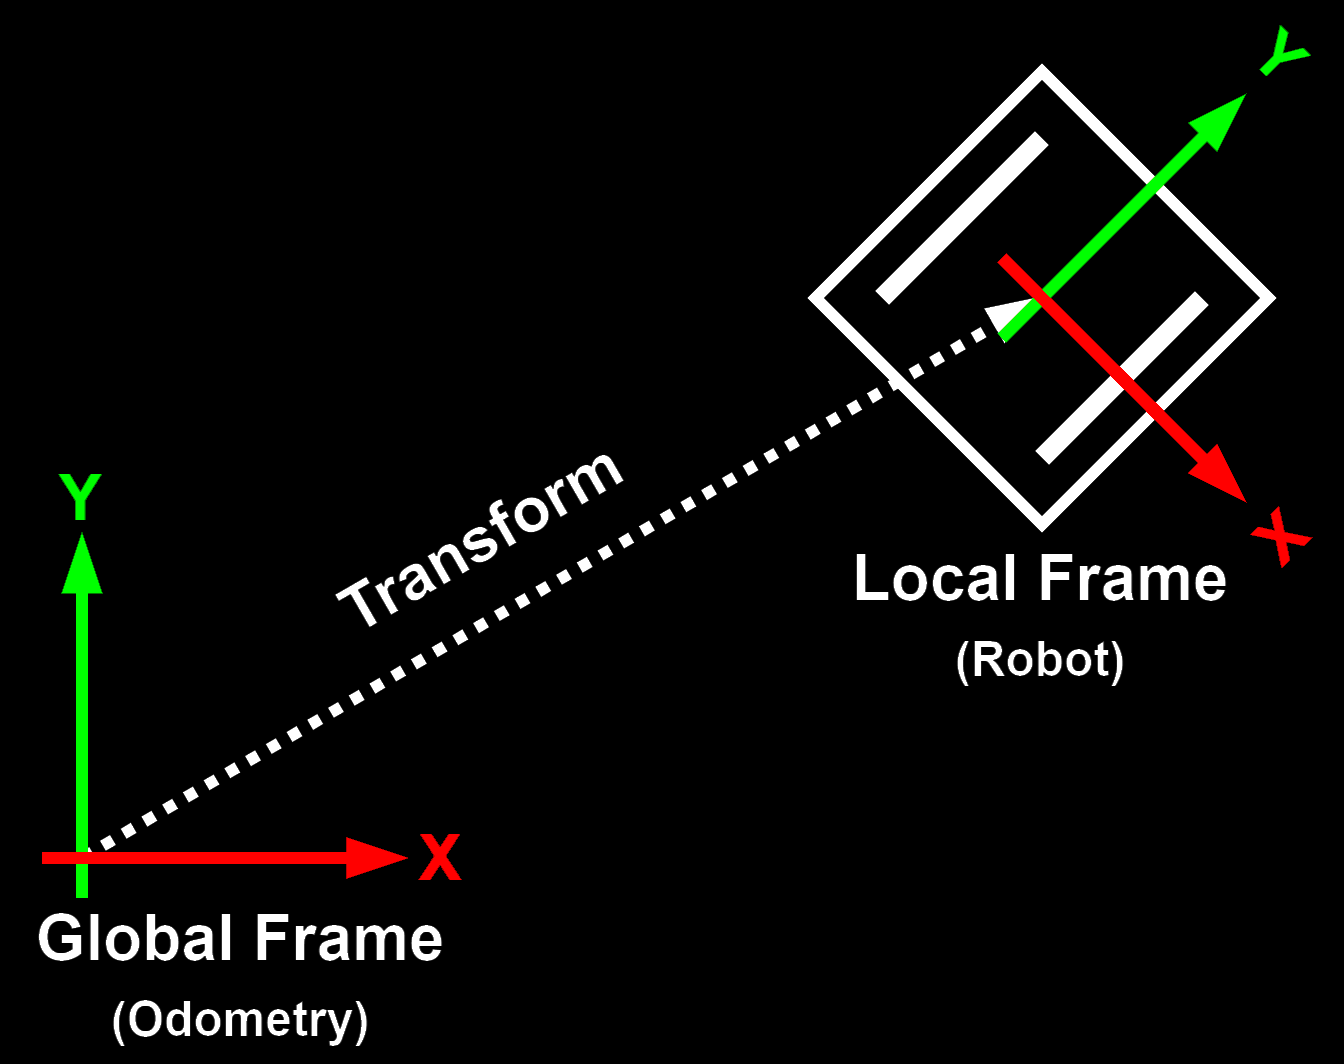 Reference Frames